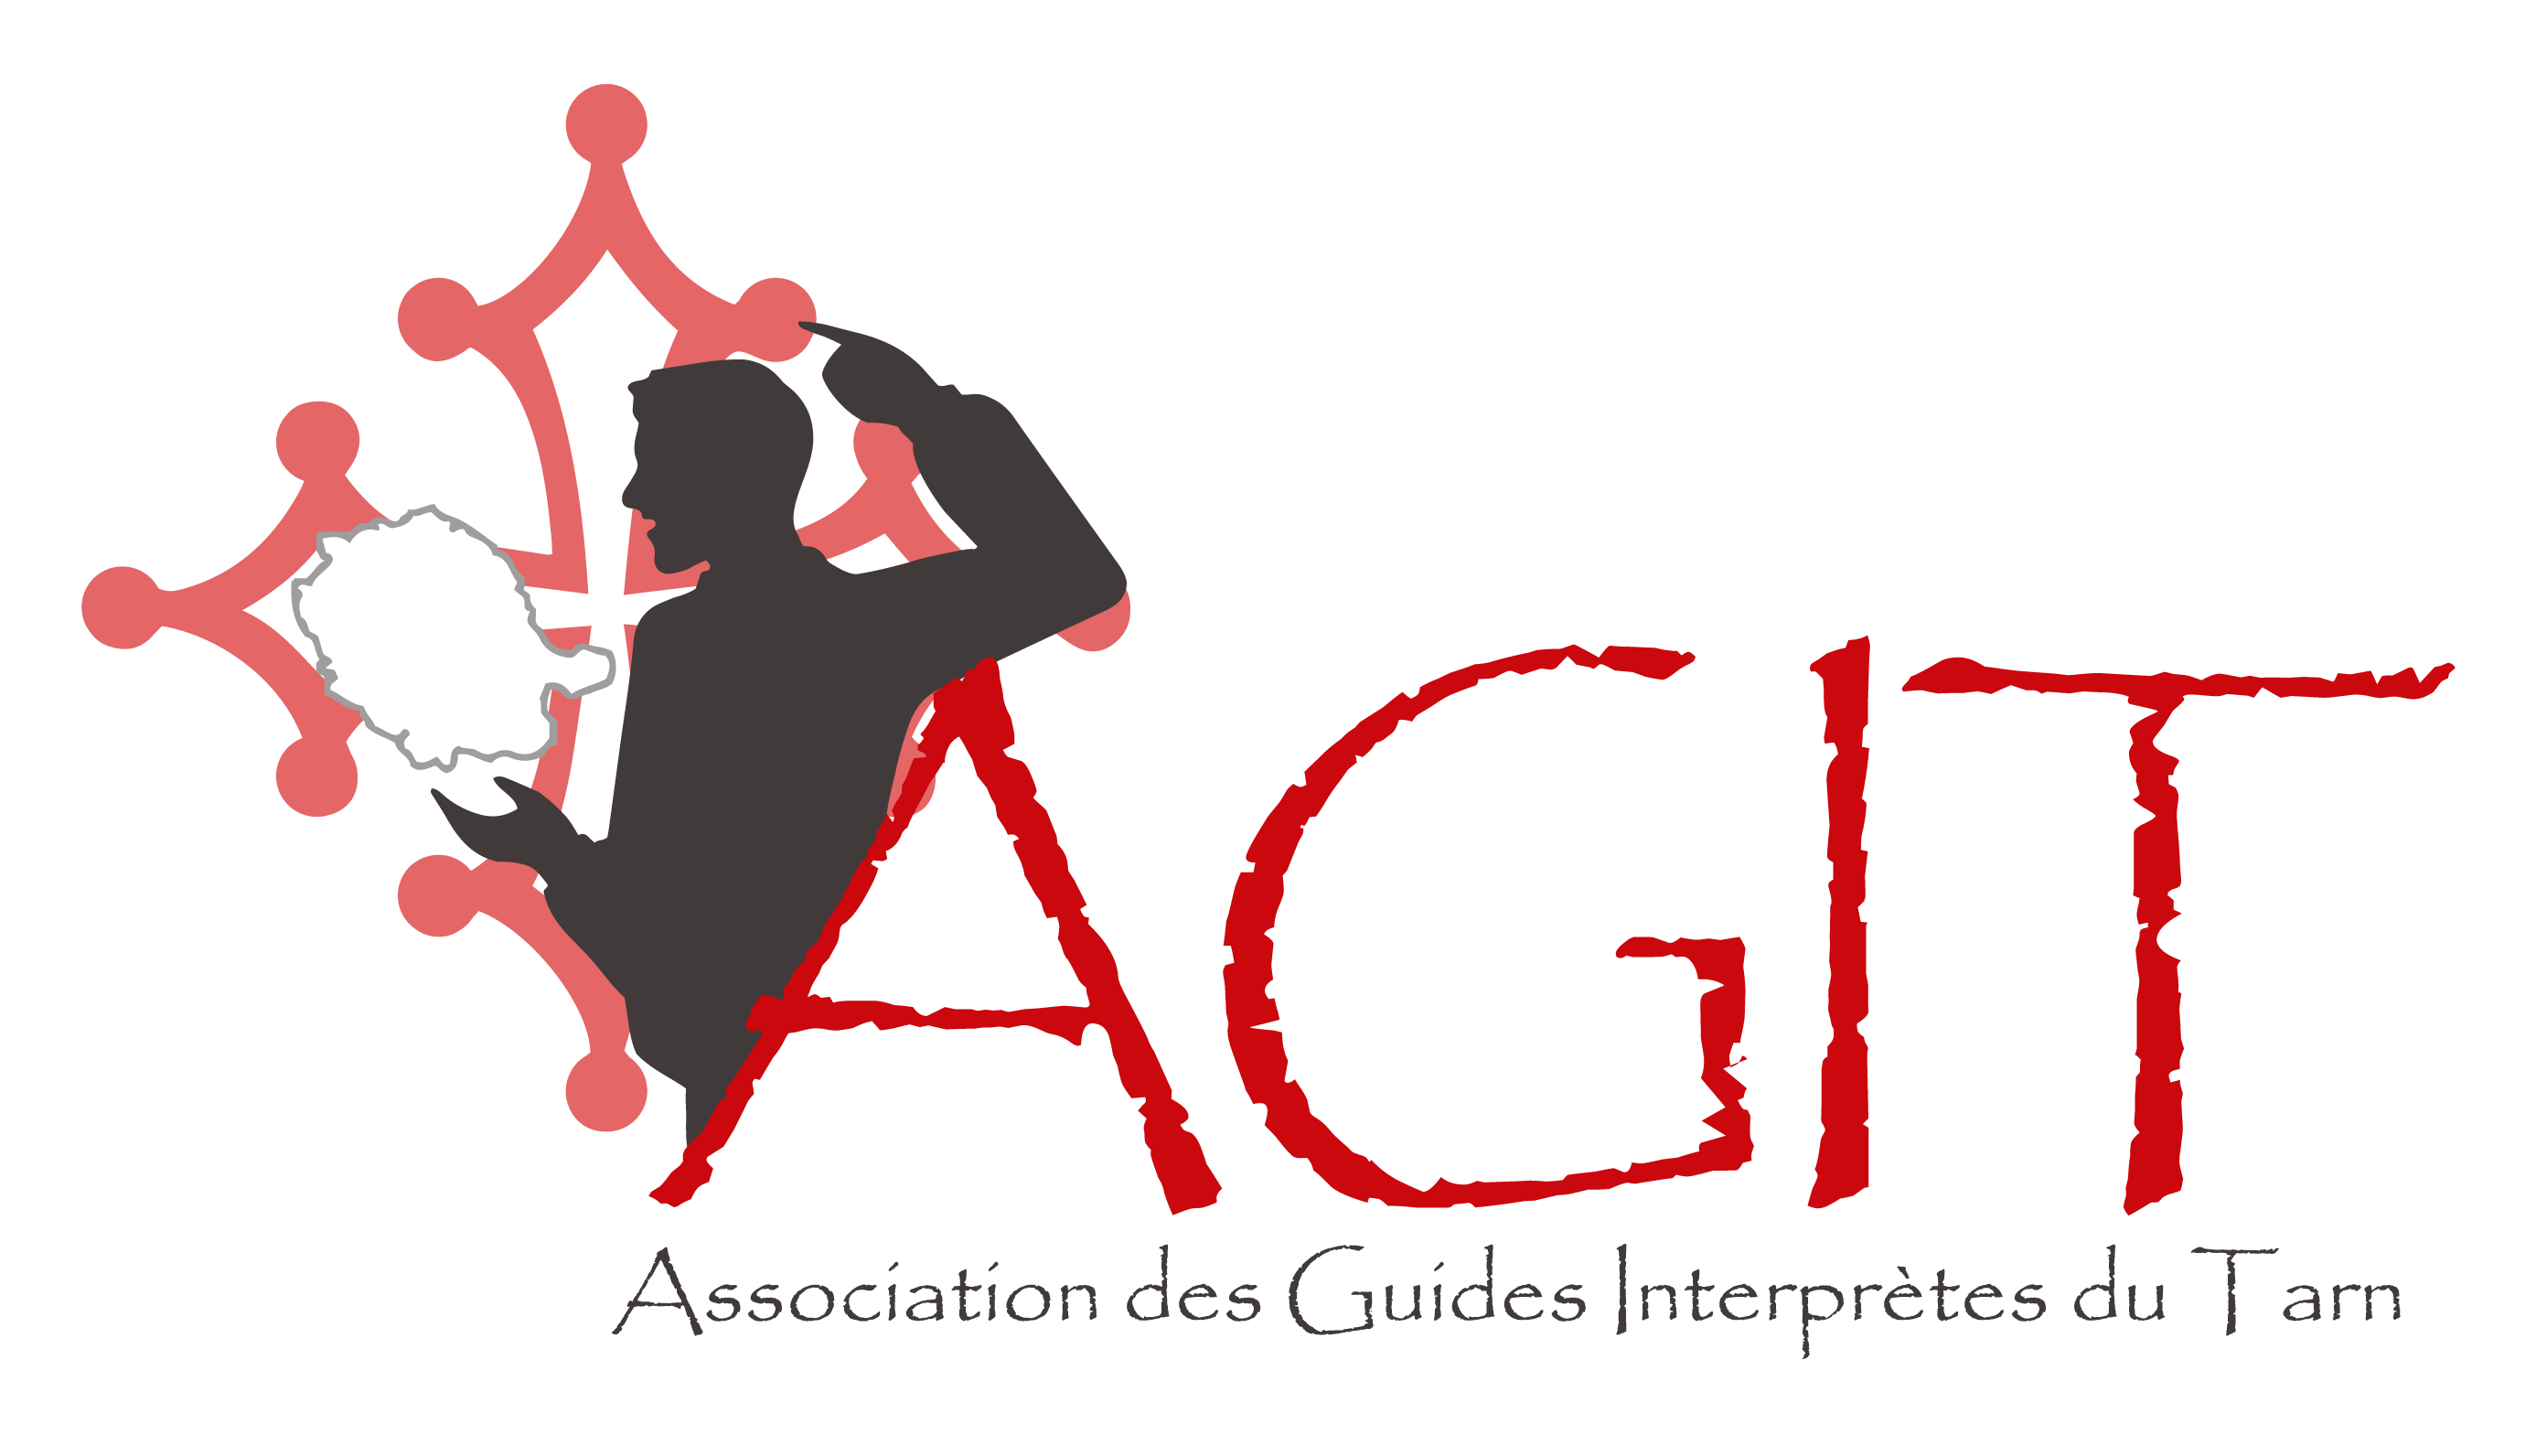 Logo Agit